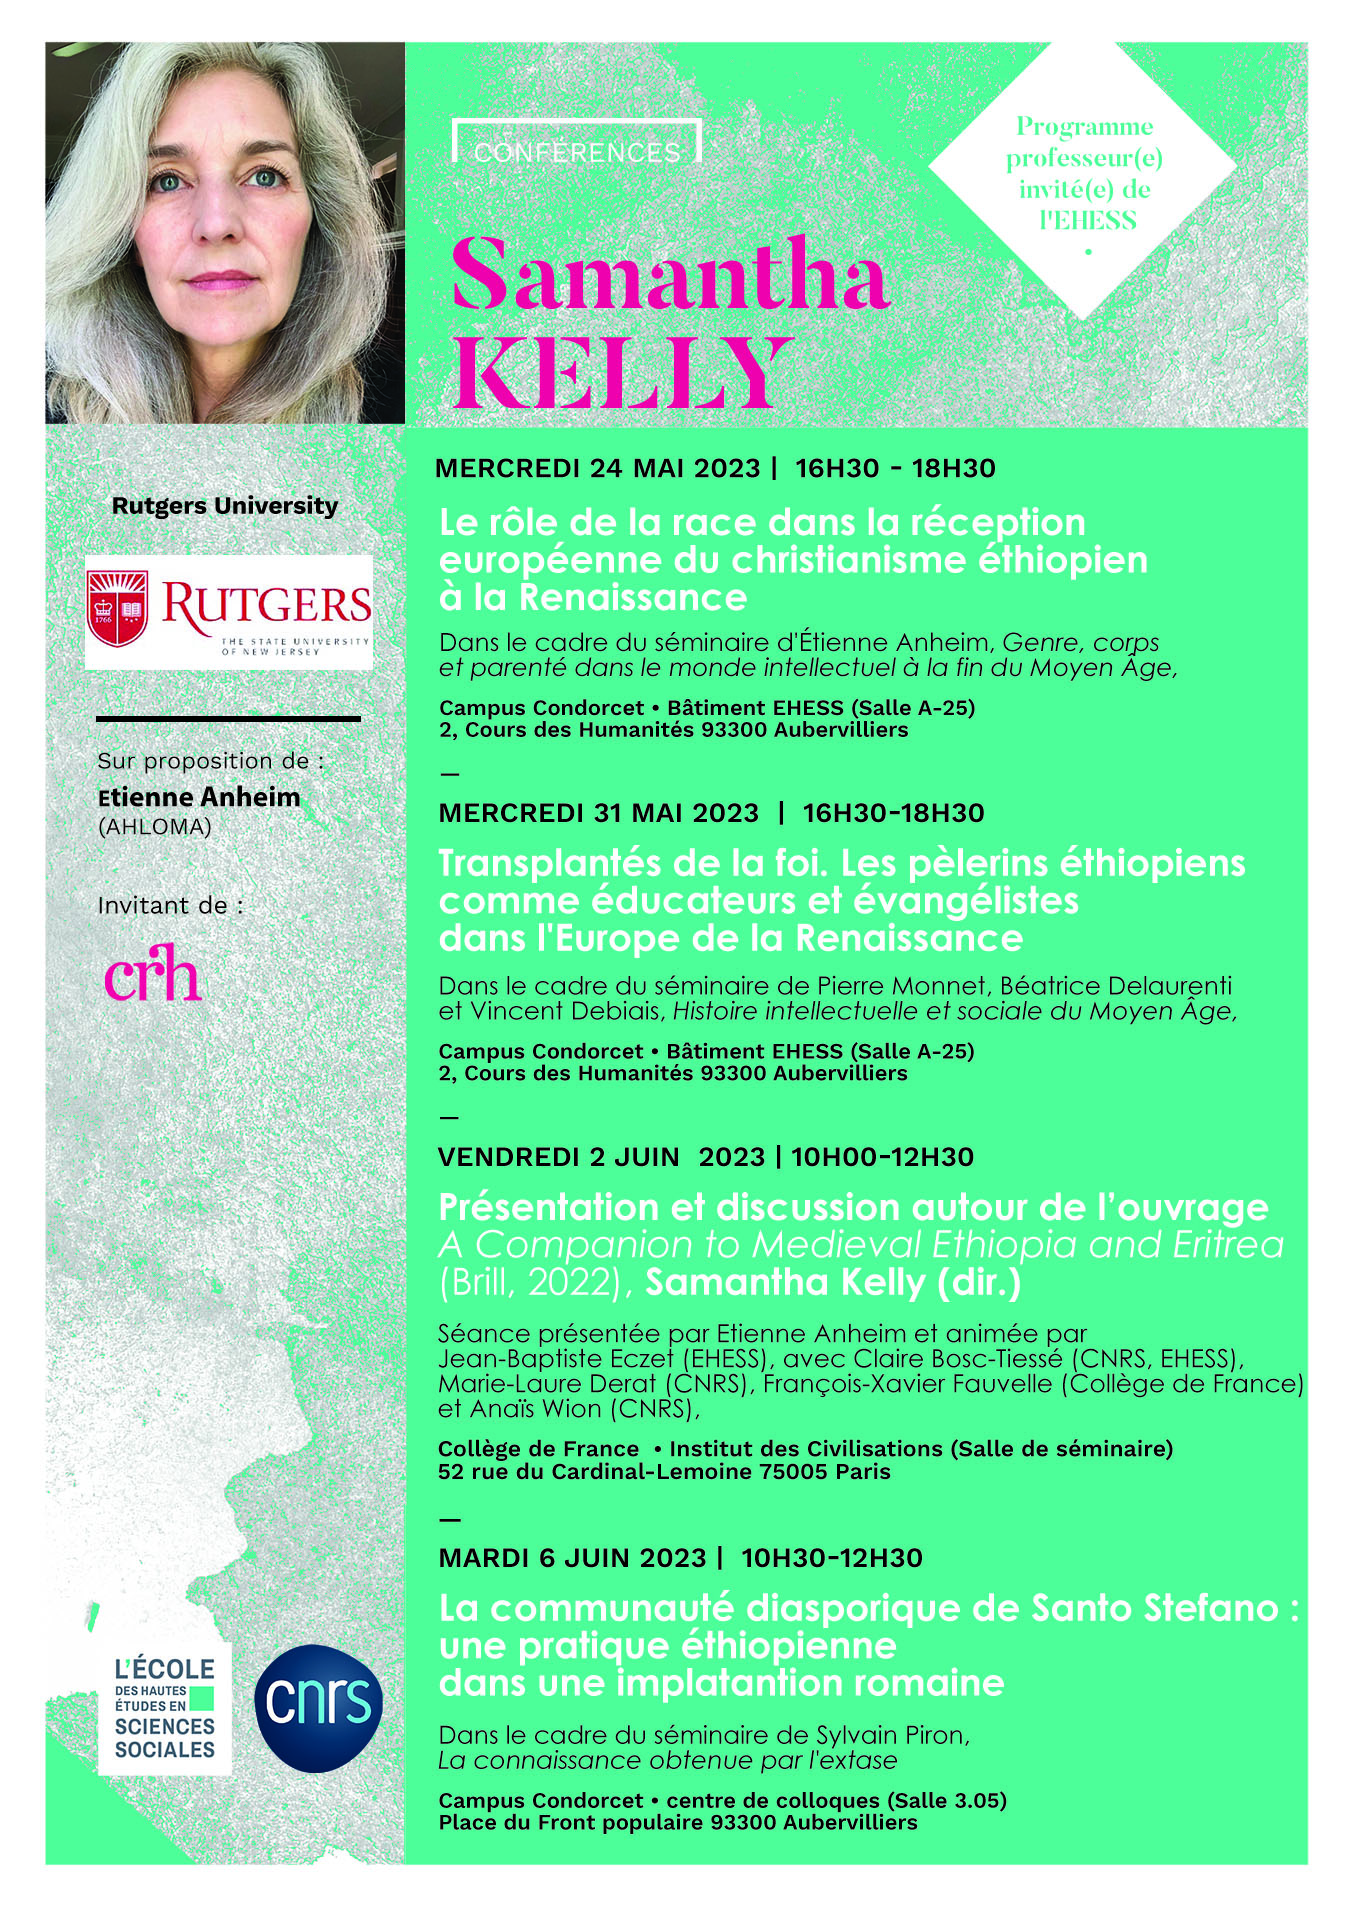 Samantha Kelly (Rutgers University)